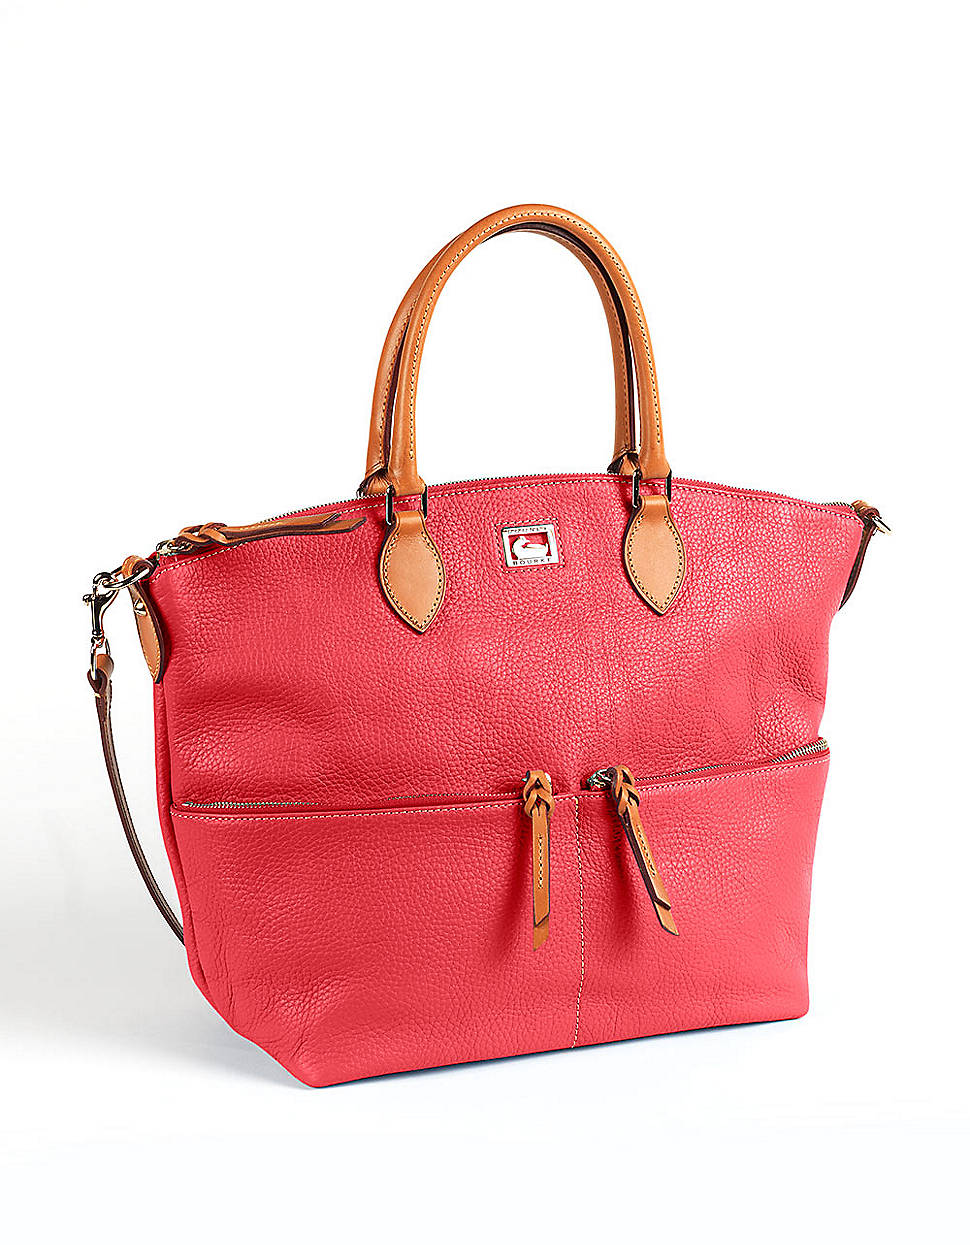 Dooney & Bourke Dillen Ii Large Leather Pocket Satchel Bag in Pink ...